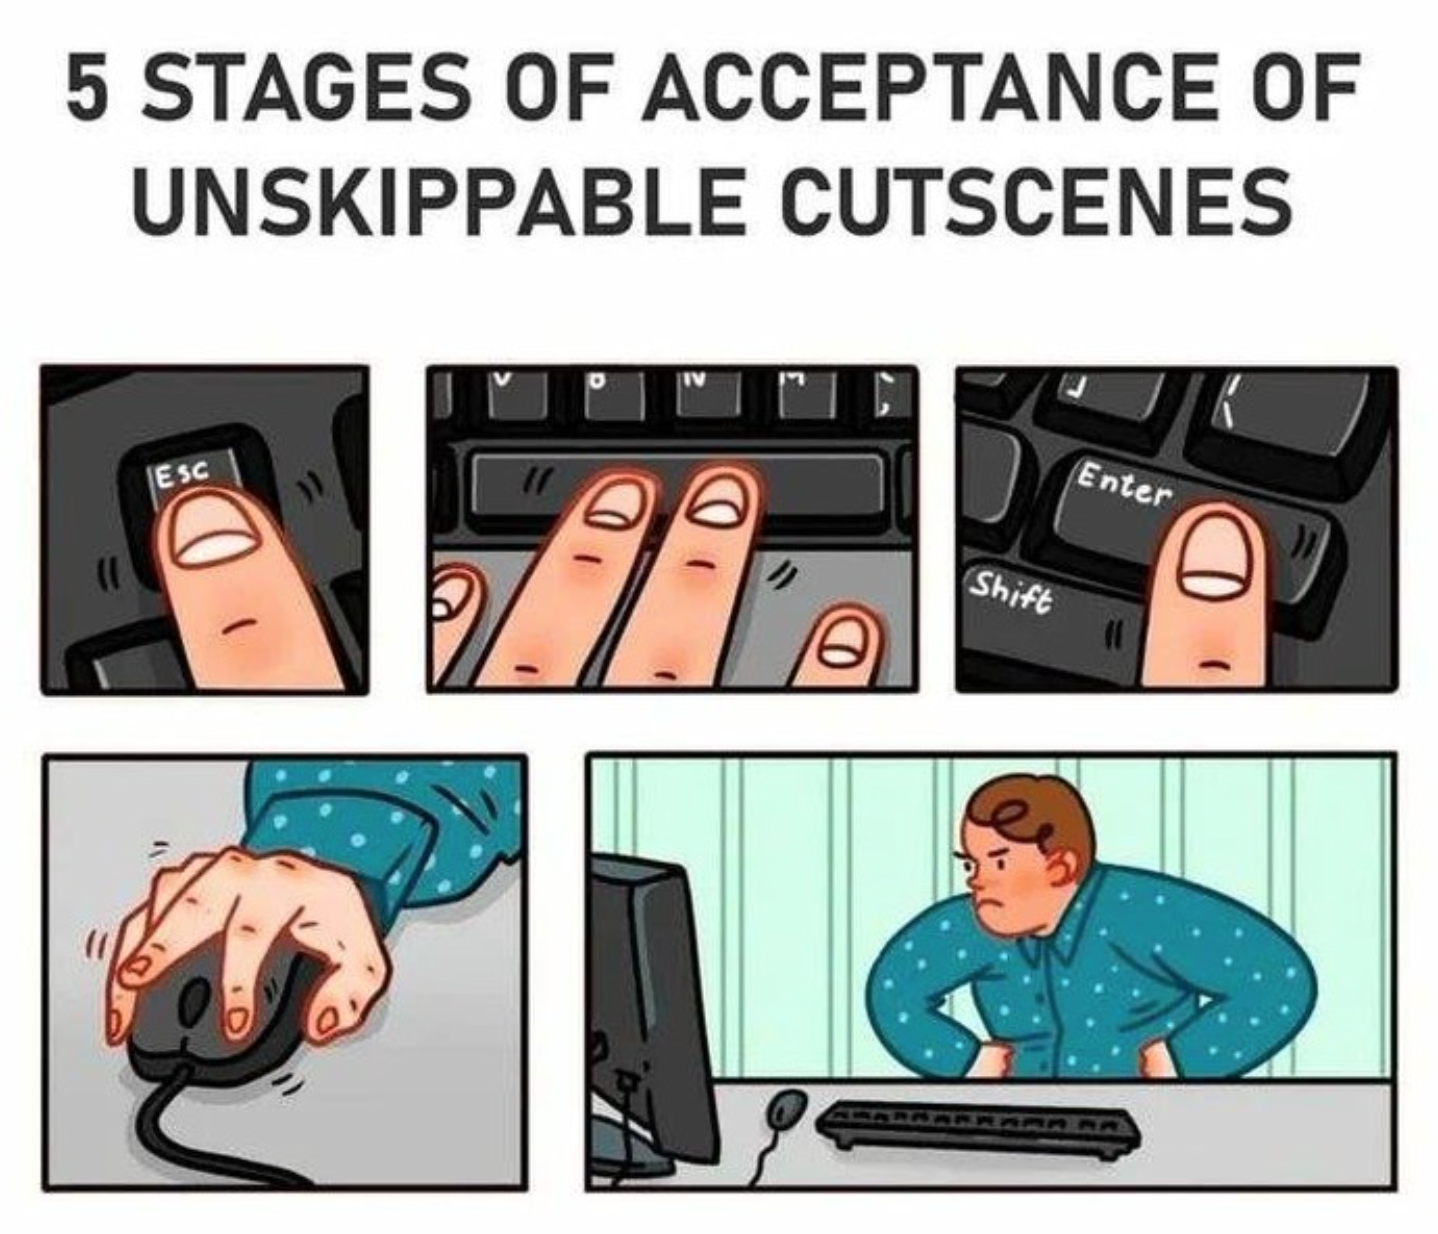 funny gaming memes  - - 5 stages of unskippable cutscenes - 5 Stages Of Acceptance Of Unskippable Cutscenes Esc Enter Shift o